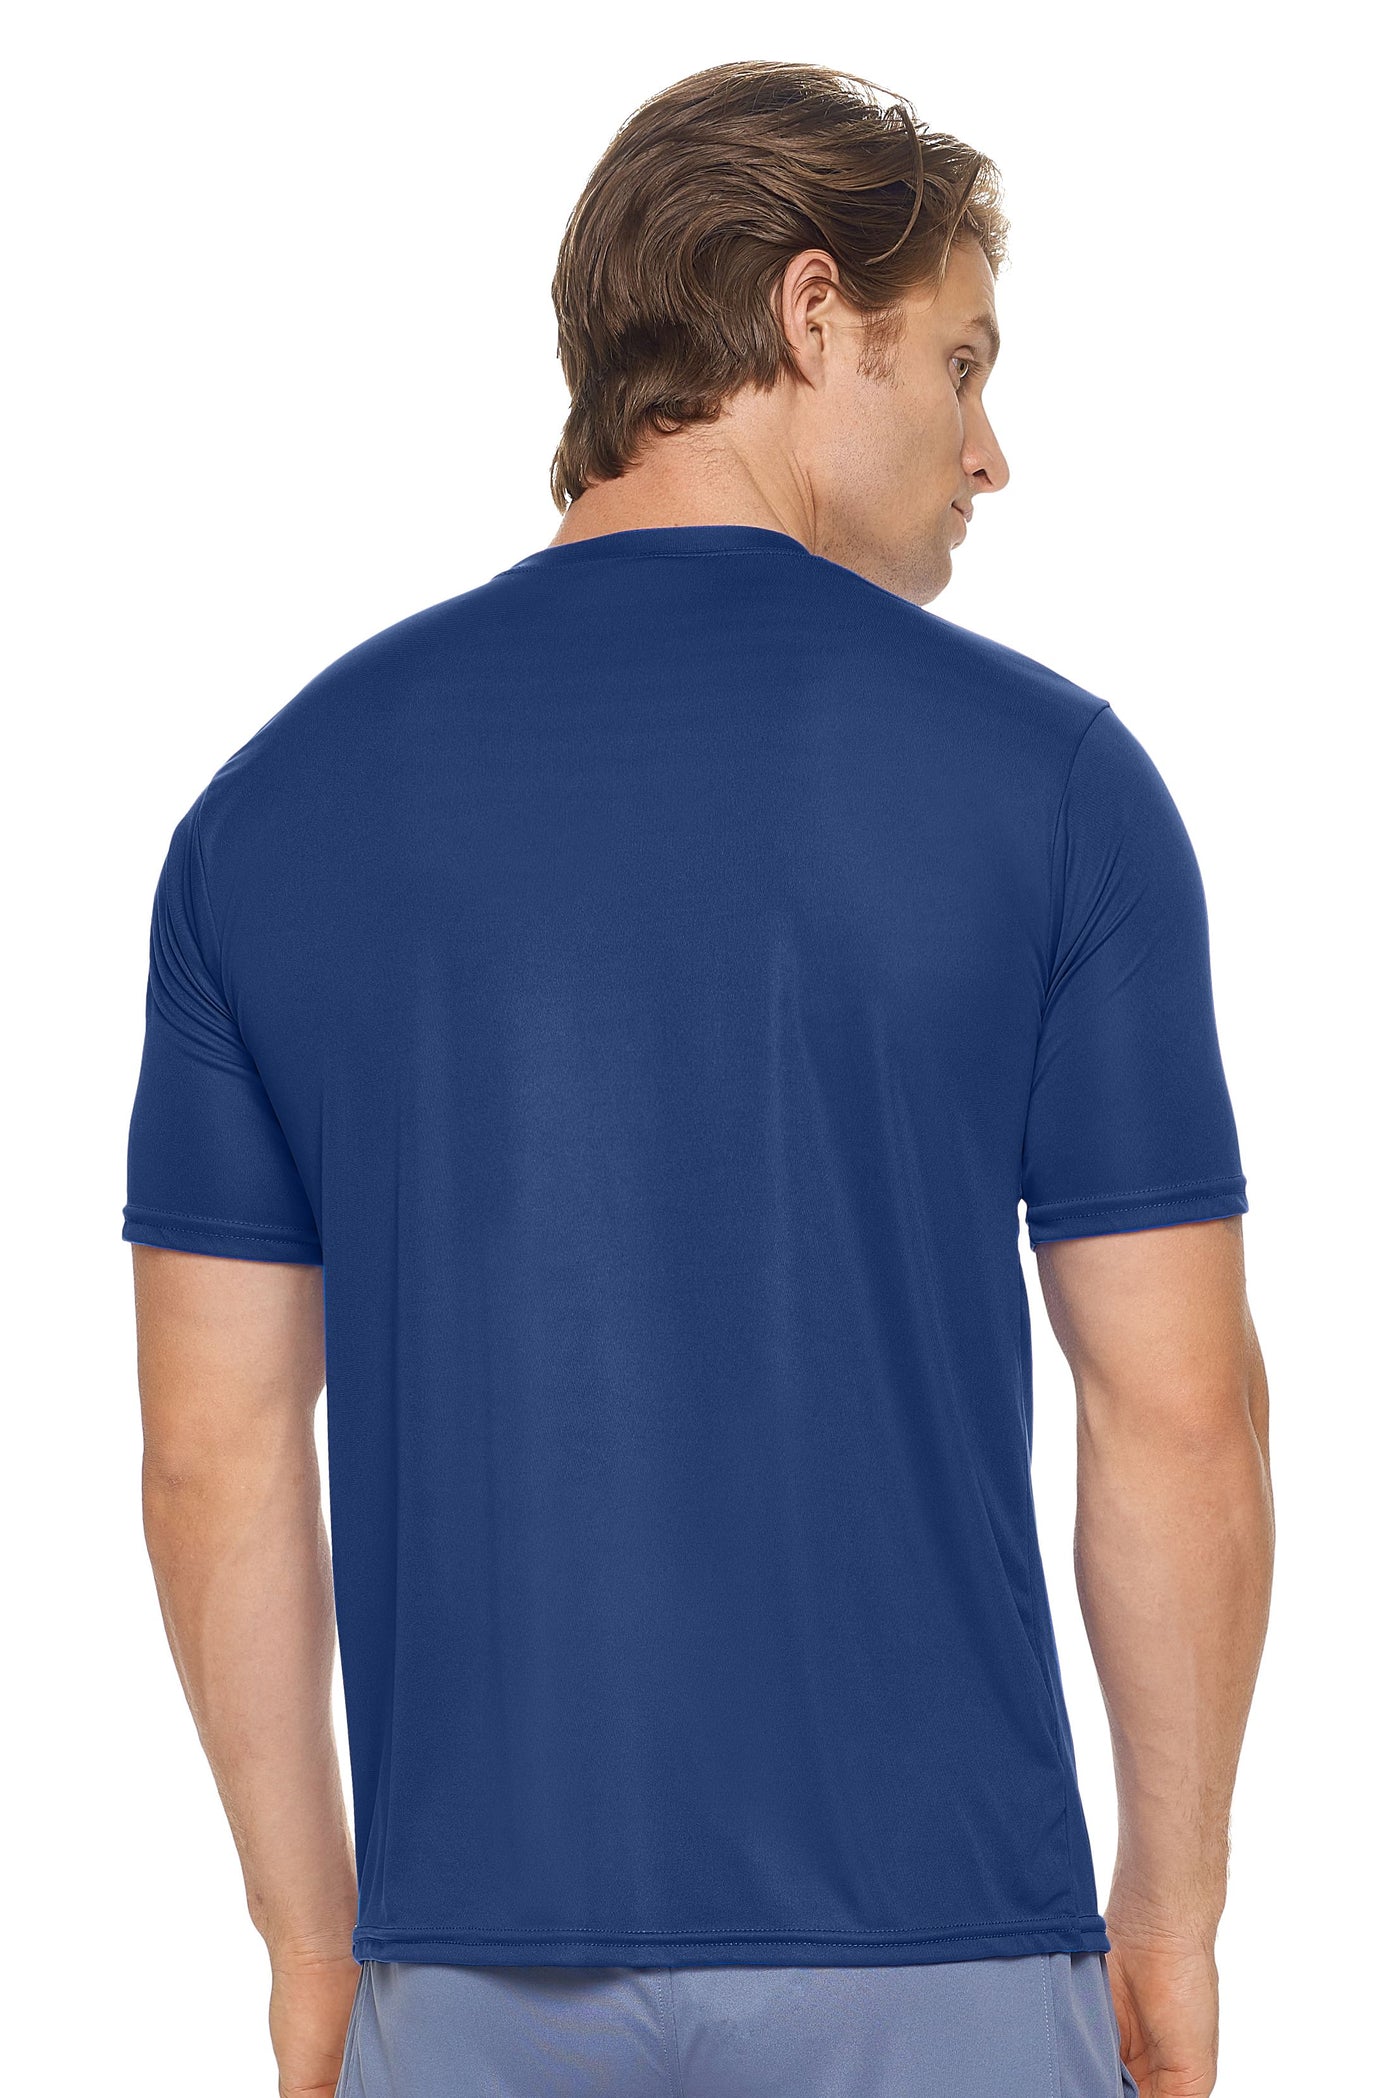 Expert Brand Retail Made in USA Men's Sportswear Activewear Running T-Shirt Pk Max navy 3#color_navy